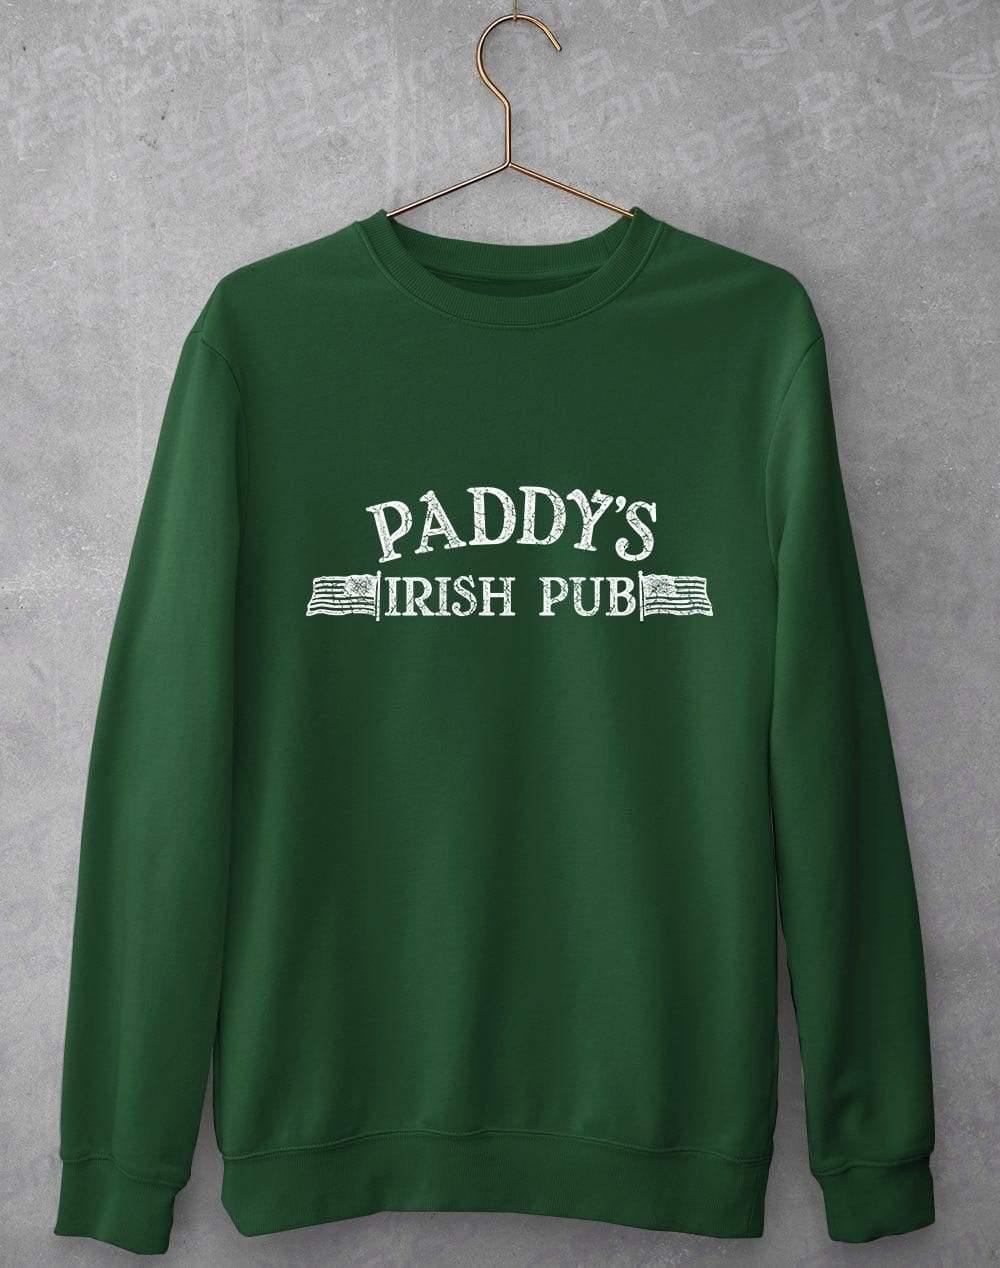 Paddys Irish Pub Sweatshirt S / Bottle Green  - Off World Tees